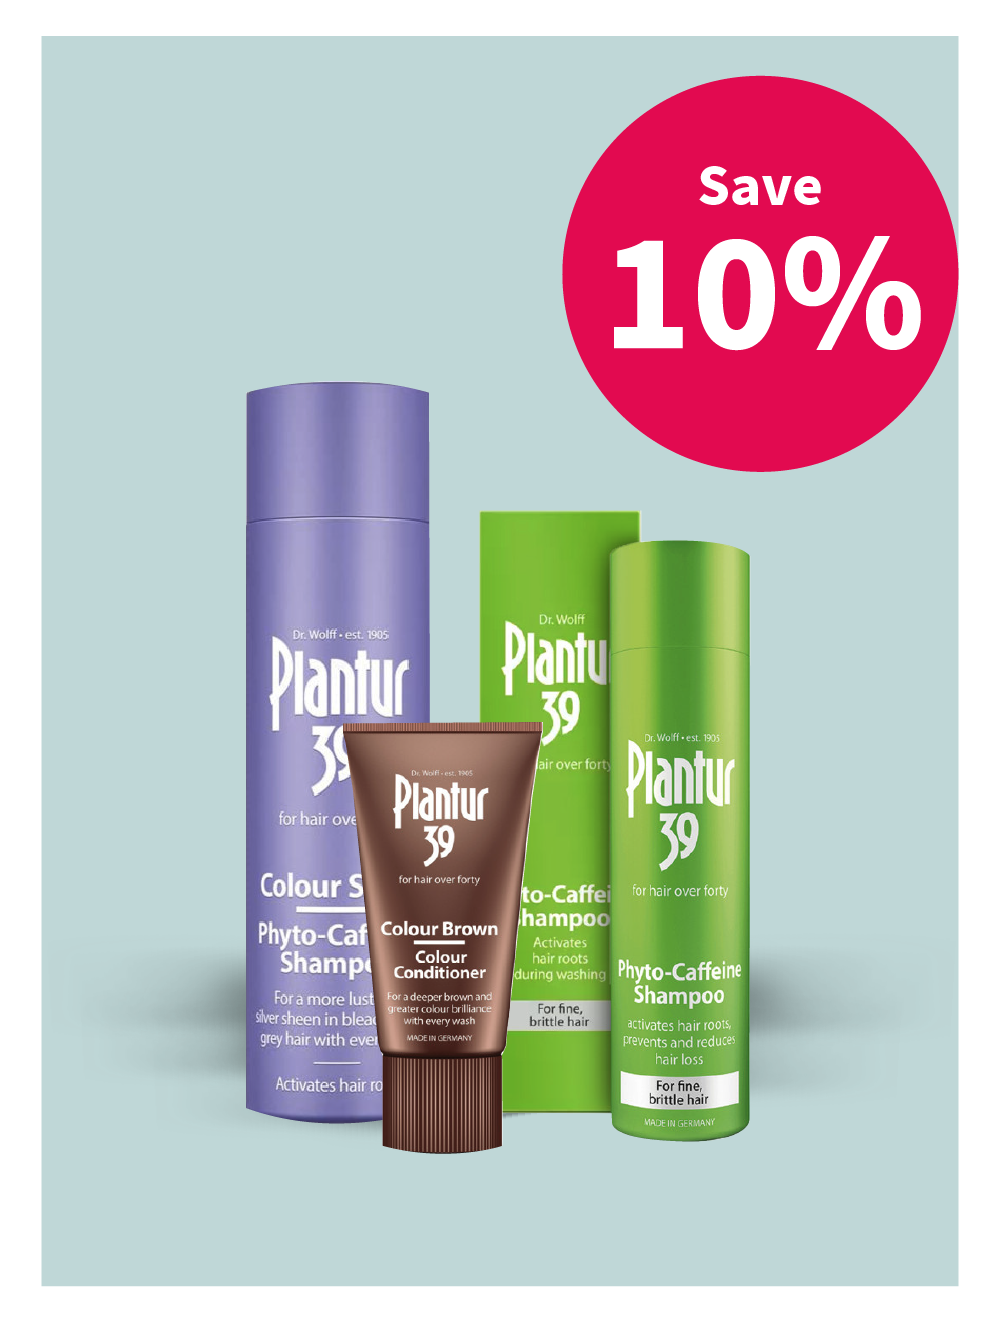 Save 10% on Plantur